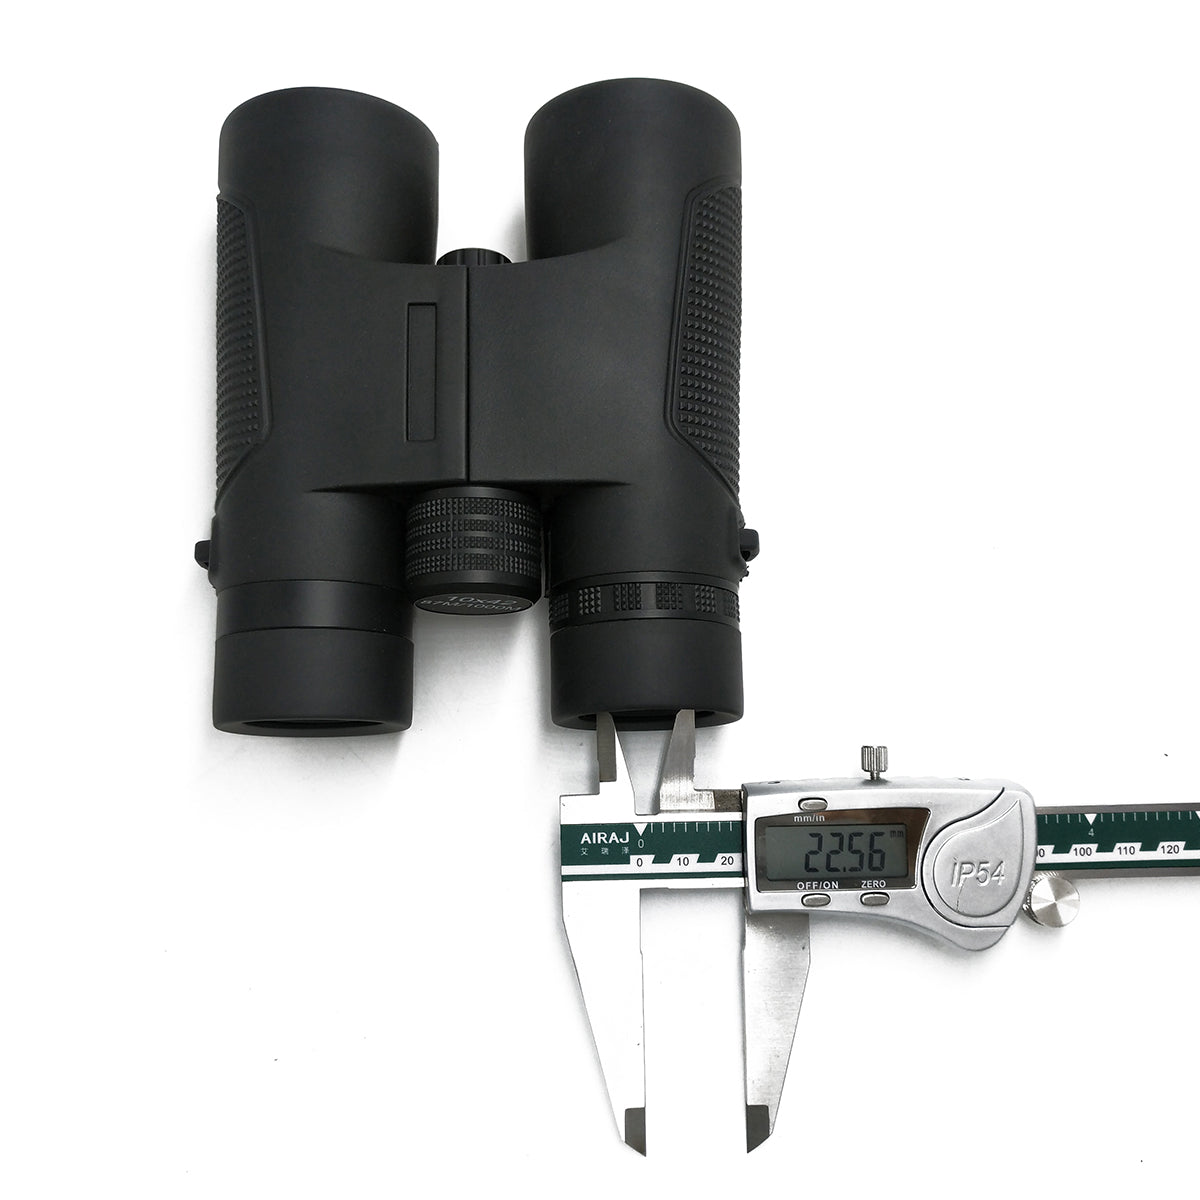 Tontube Best Binoculars 10X42 HD FMC for Stargazing Birding with Cheap Price